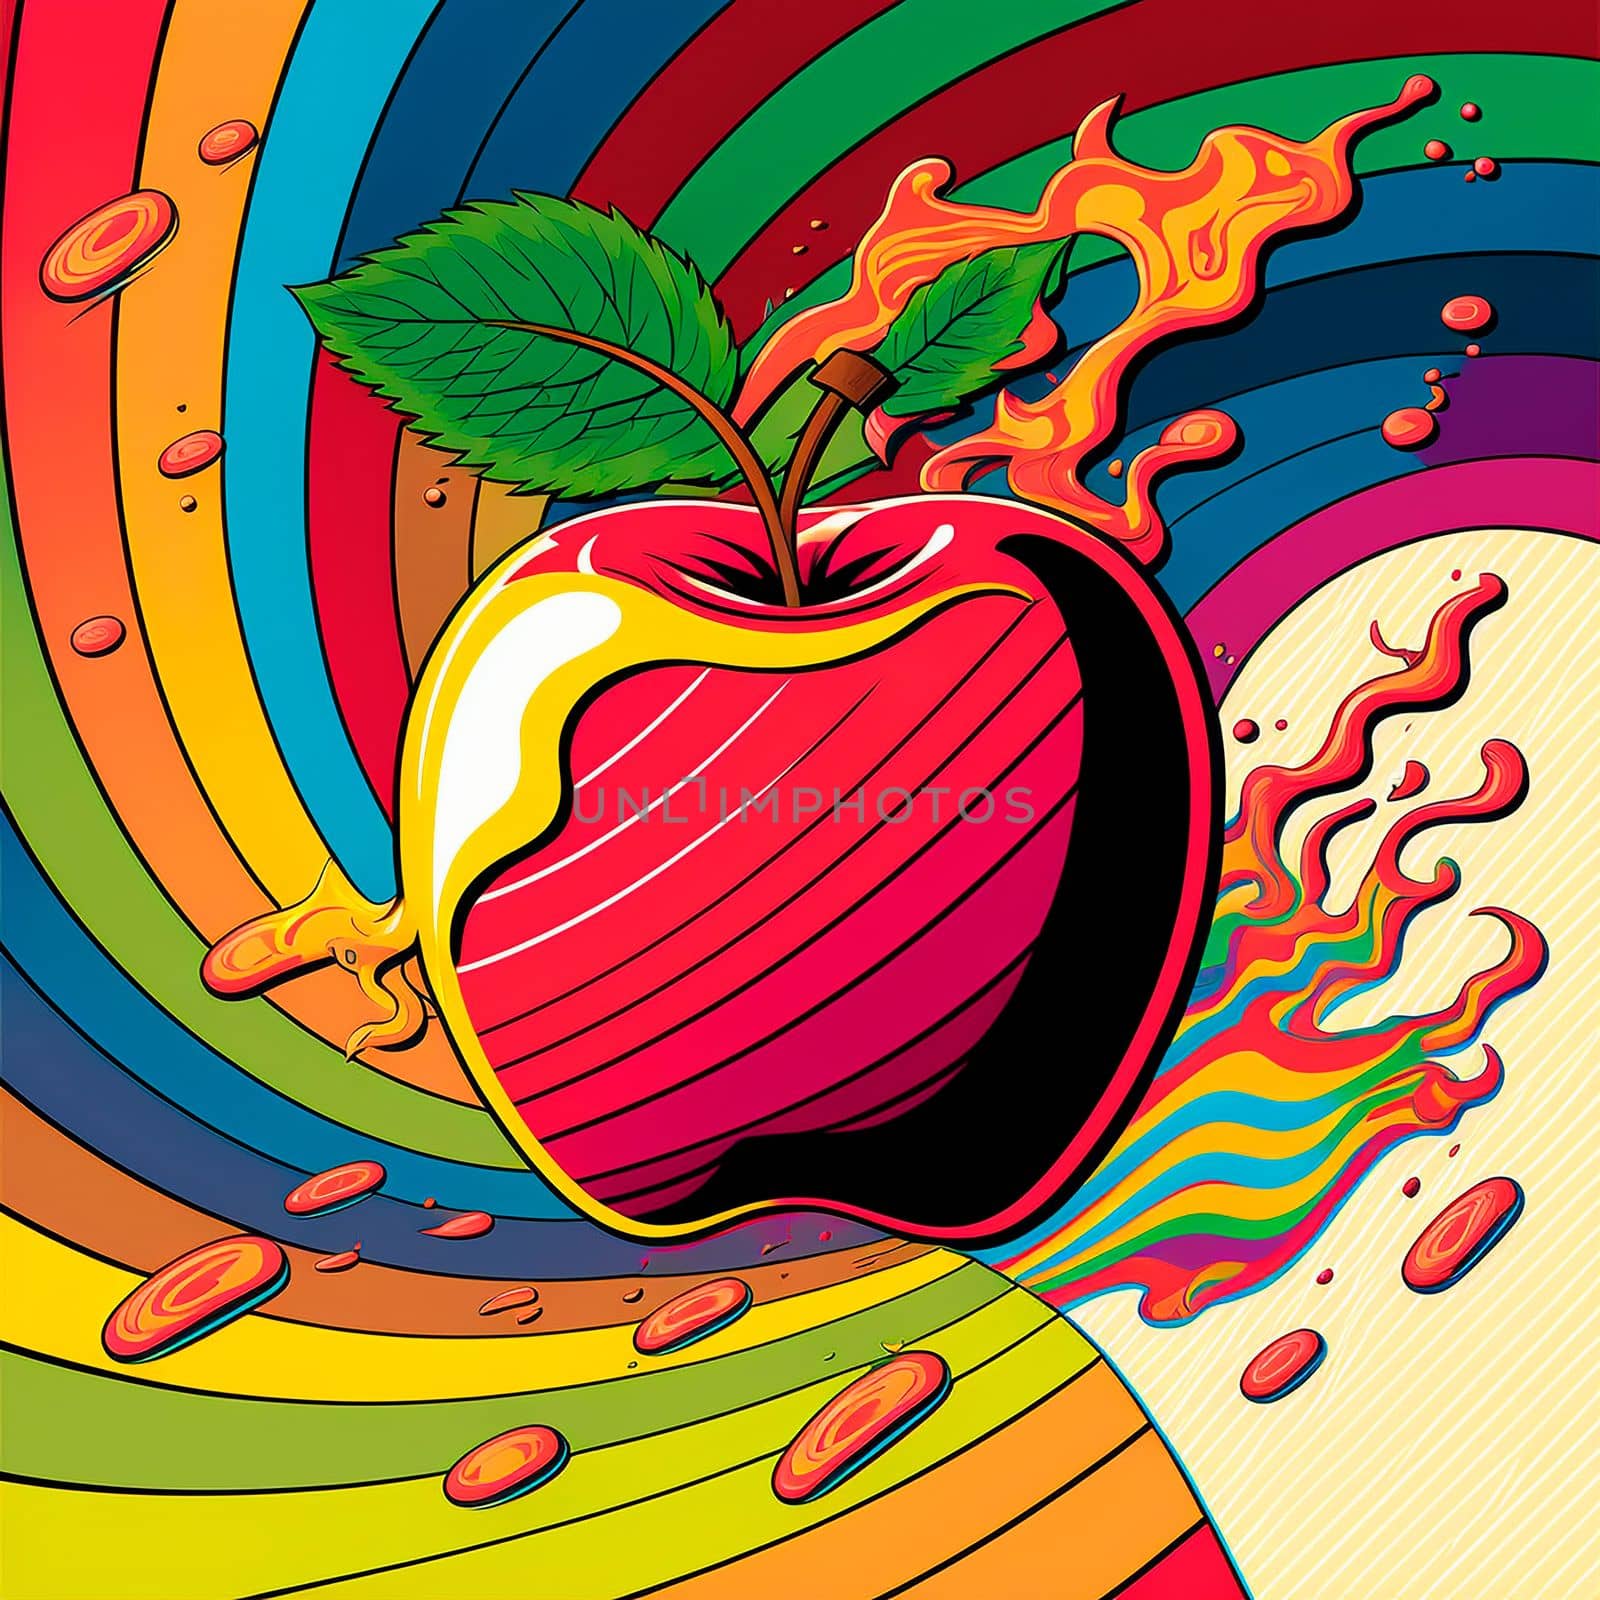 Apple in the style of pop art by NeuroSky